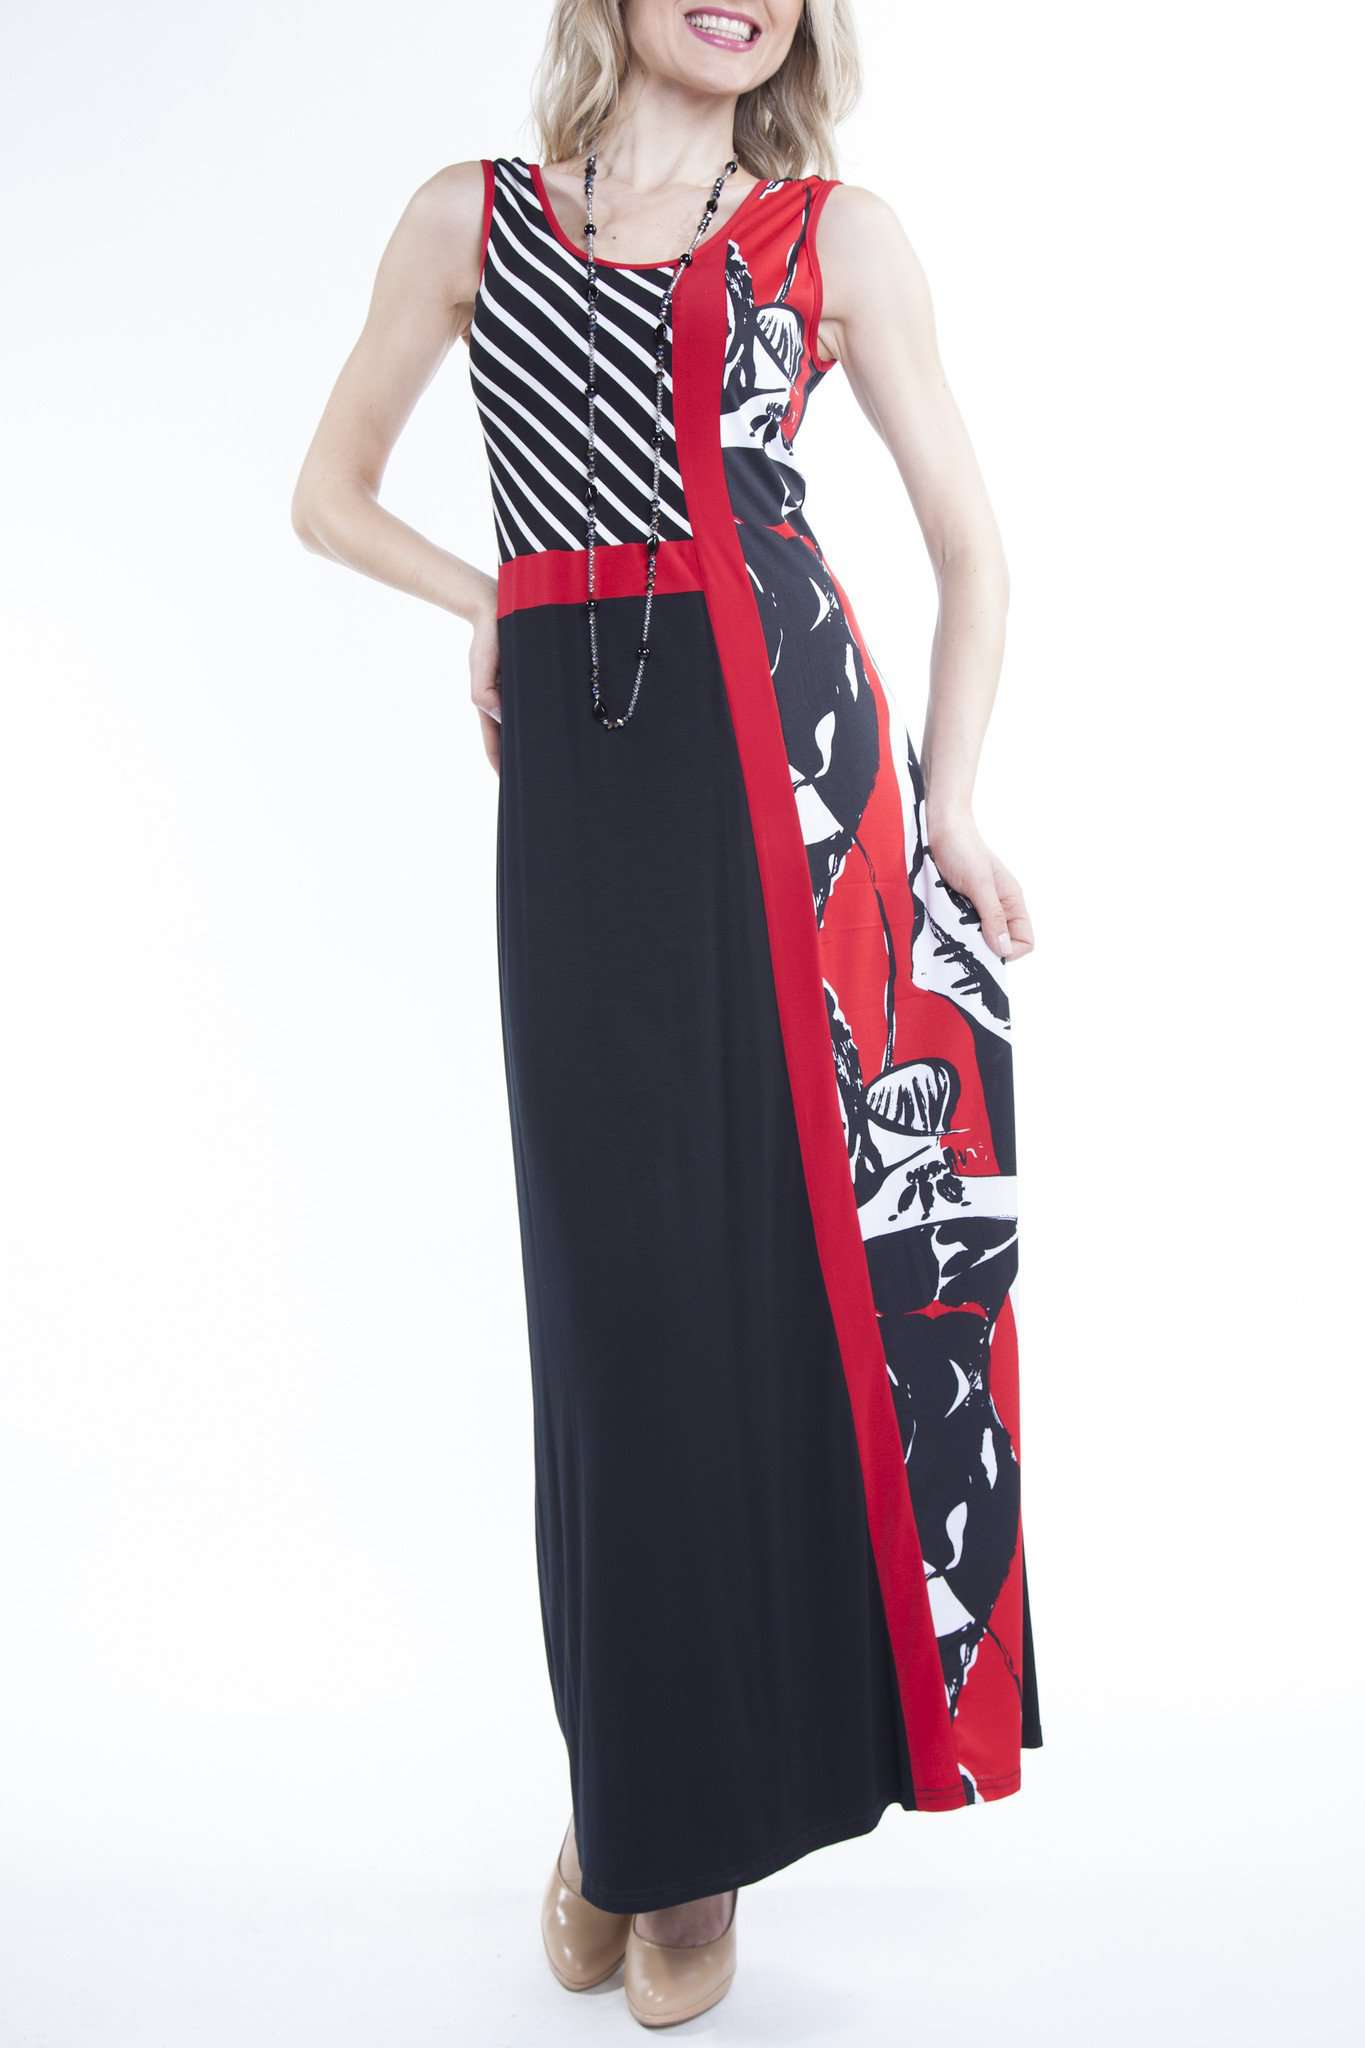 Designer Maxi Dress On sale Now 70% Off Quality Stretch Fabric Designer Original Yvonne Marie Boutiques Made In Canadaa - Yvonne Marie - Yvonne Marie